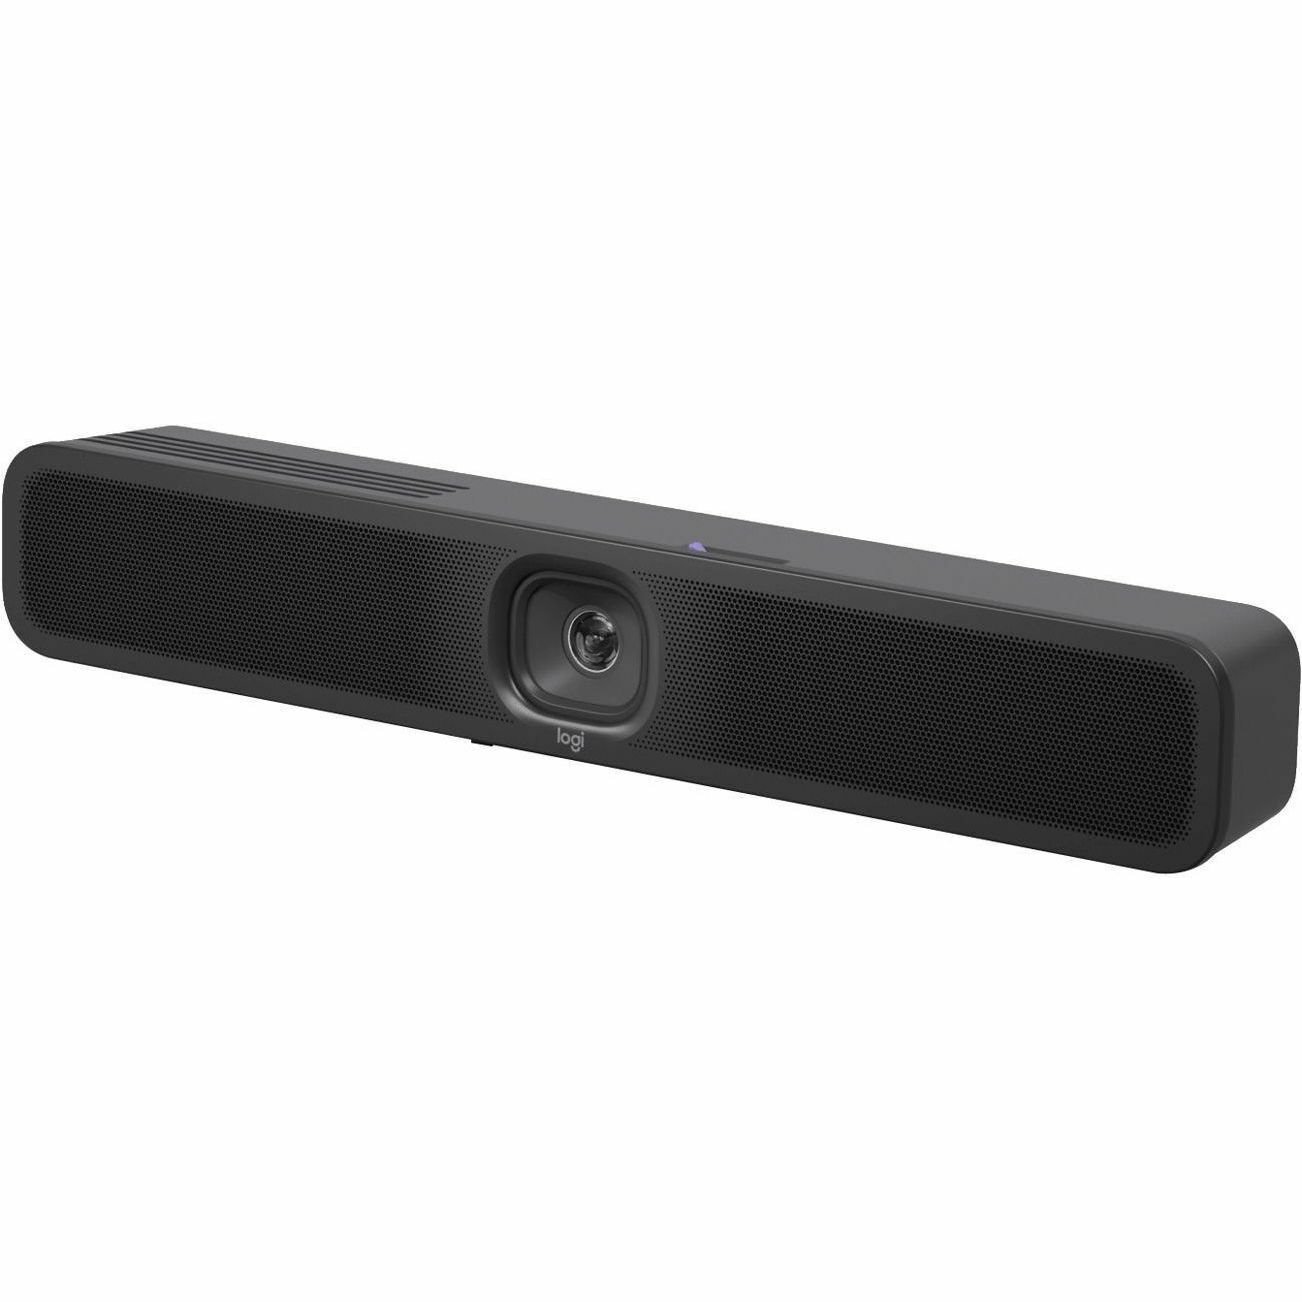 Logitech MeetUp 2 Video Conferencing Camera - USB 3.1 Type C